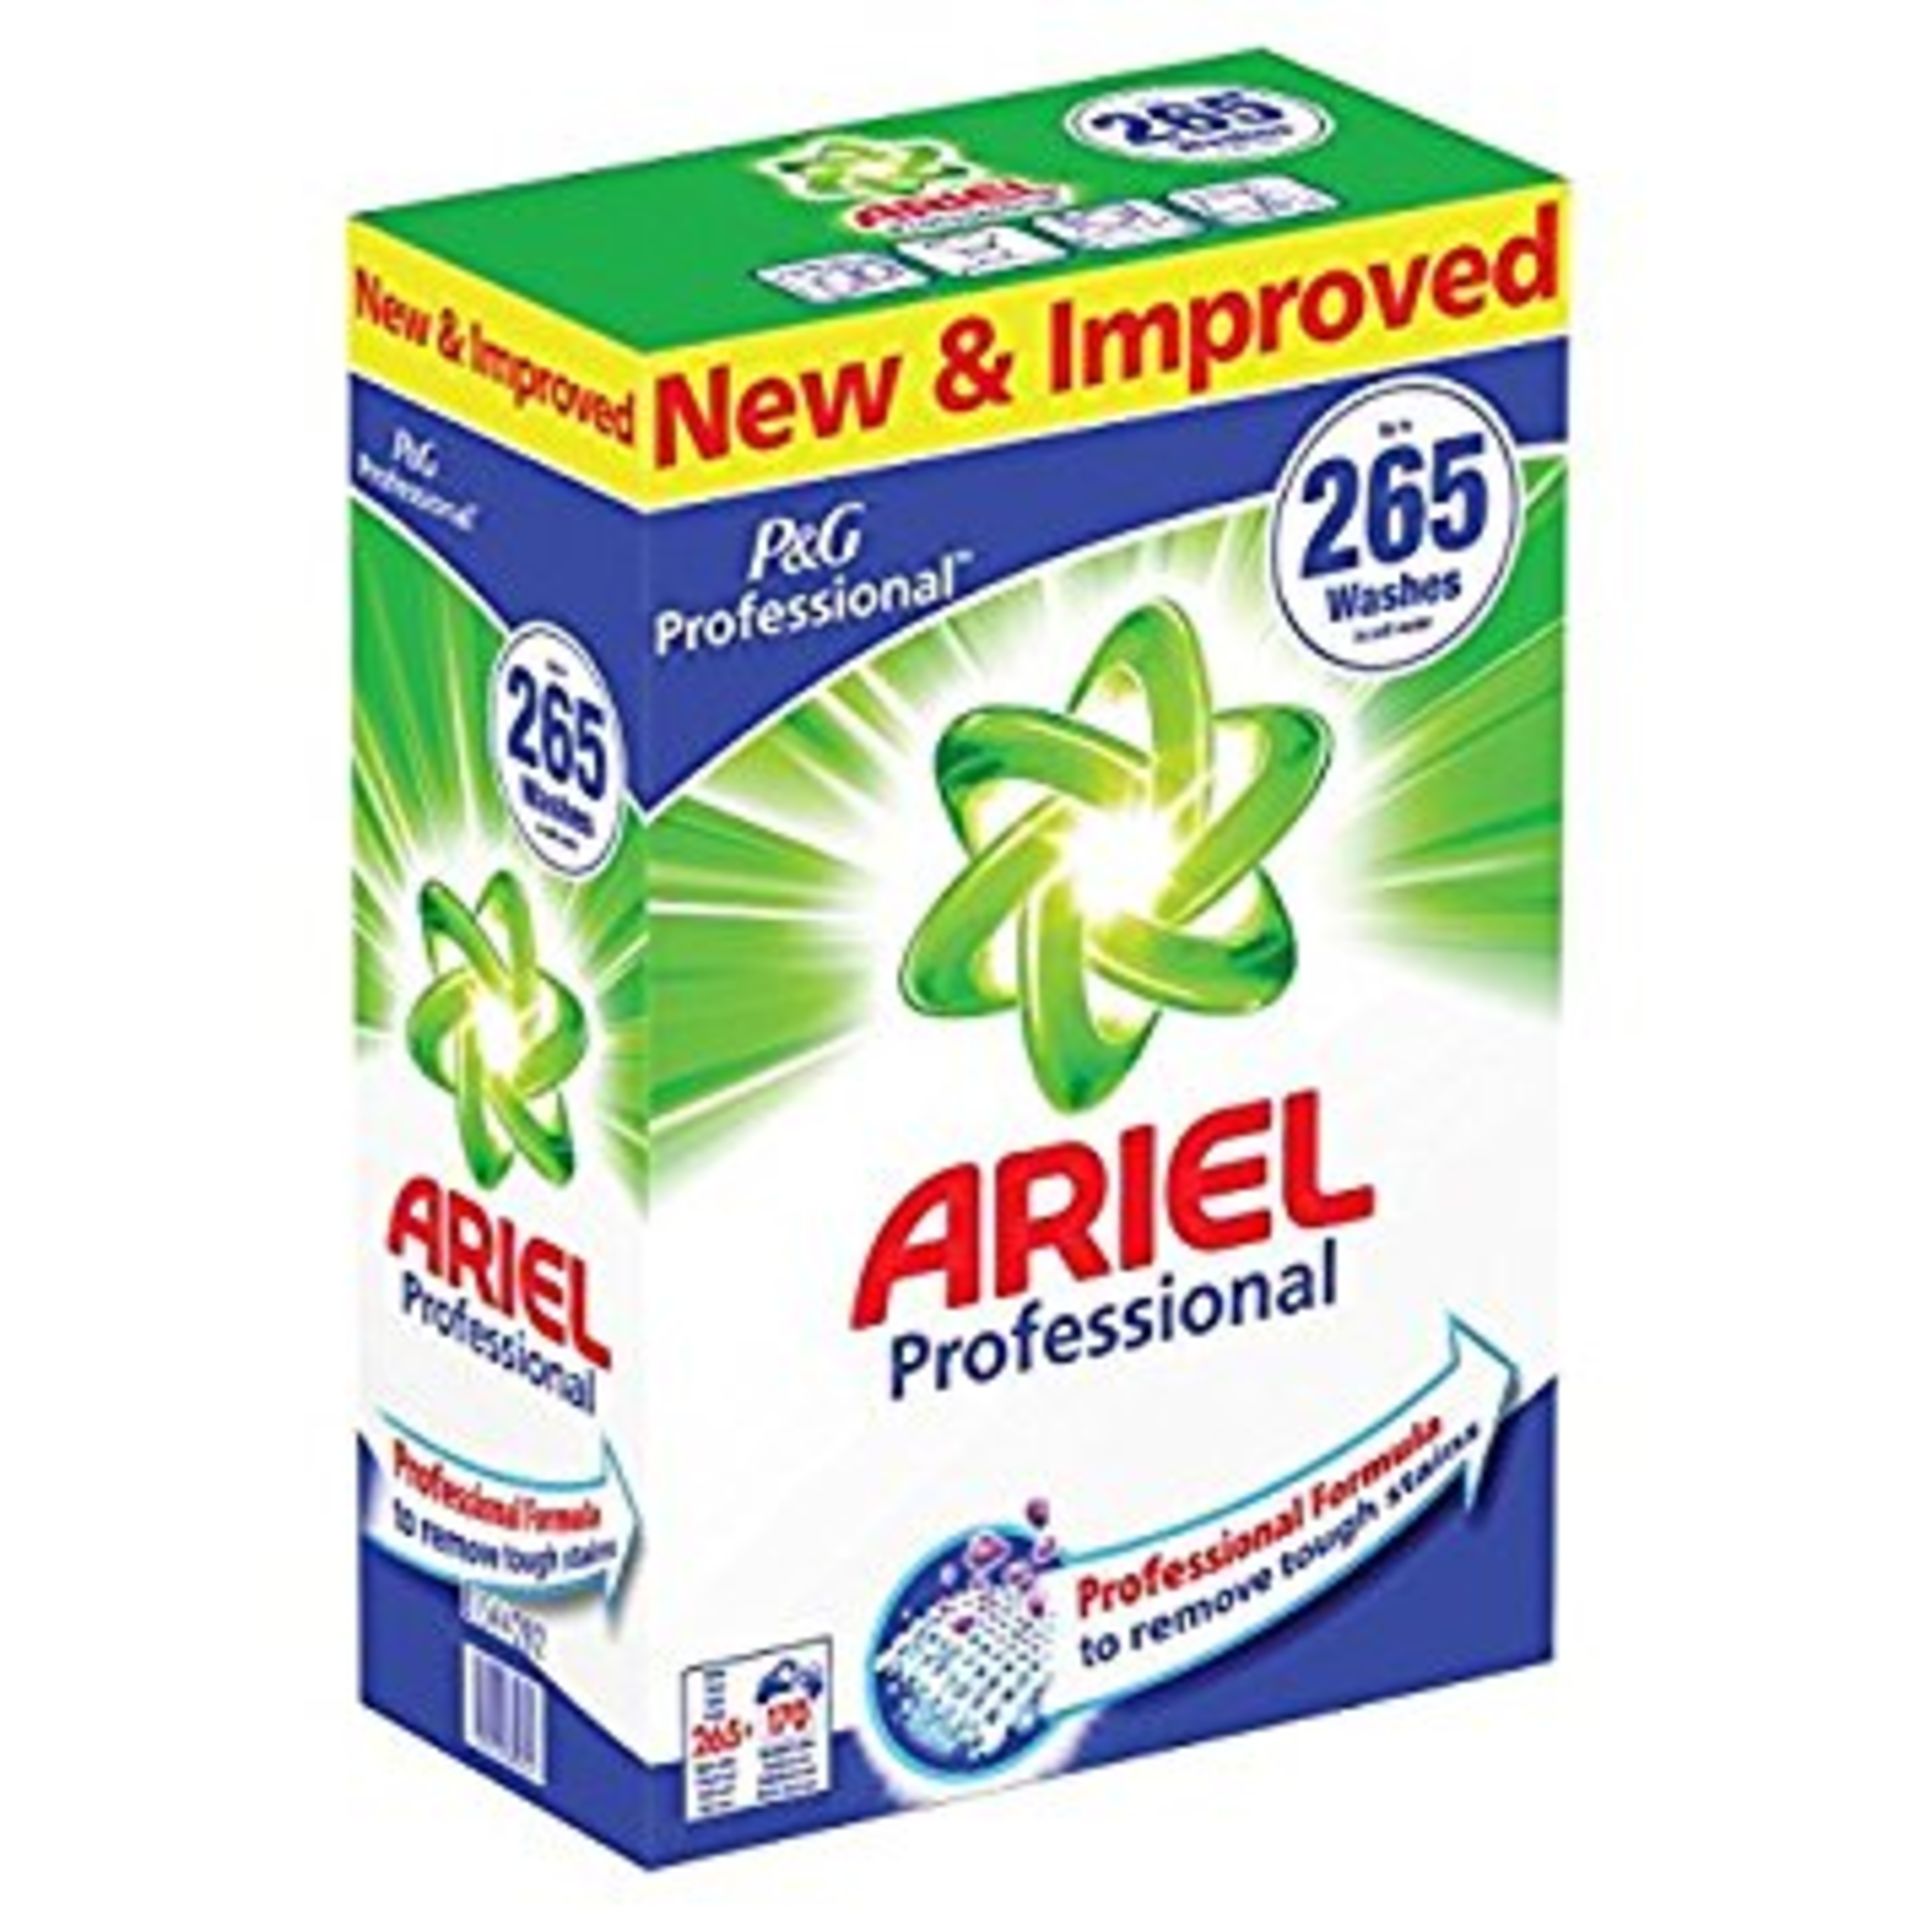 V *TRADE QTY* Brand New Ariel Professional XXL 265 Washes Washing Powder X 8 YOUR BID PRICE TO BE